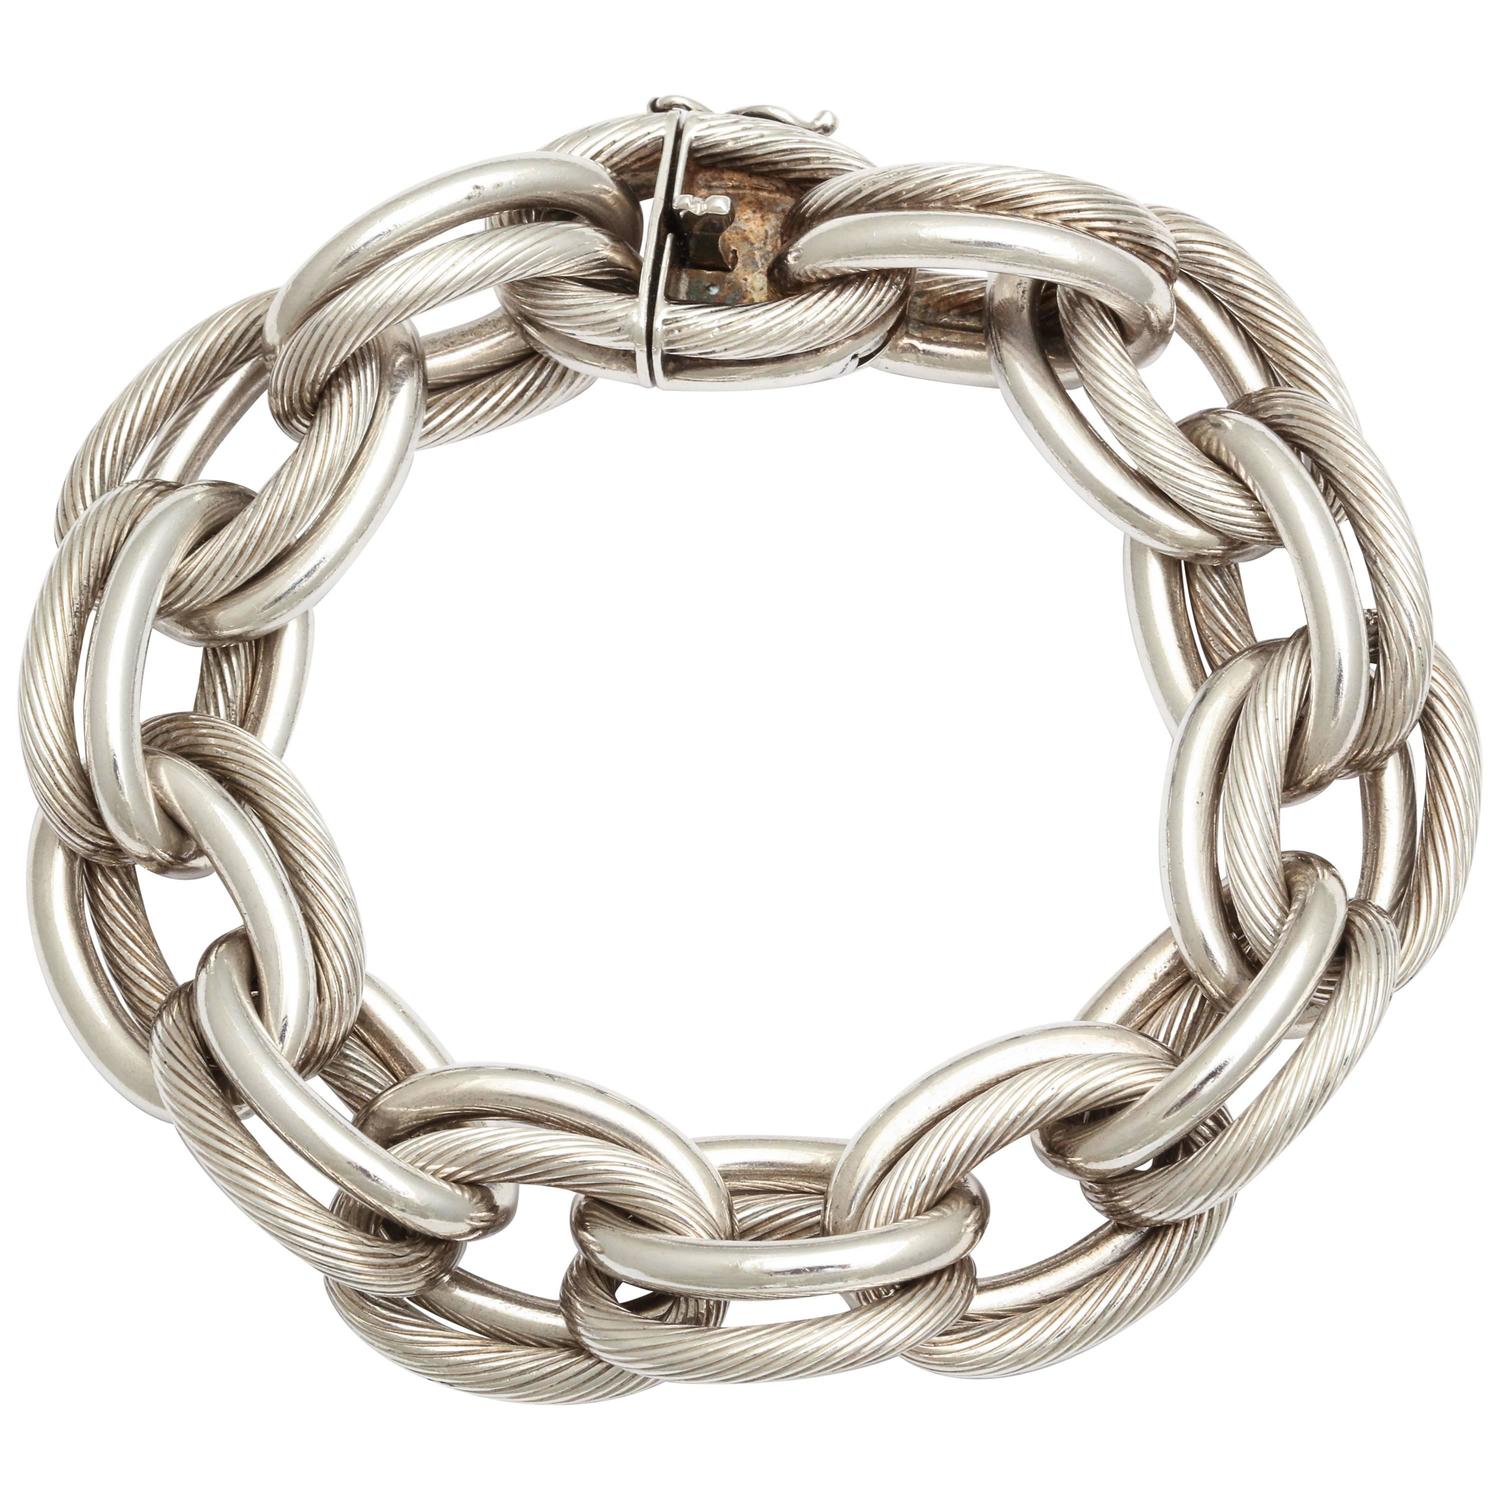 Vintage Hermes Heavy Linked Silver Chain Bracelet For Sale at 1stdibs